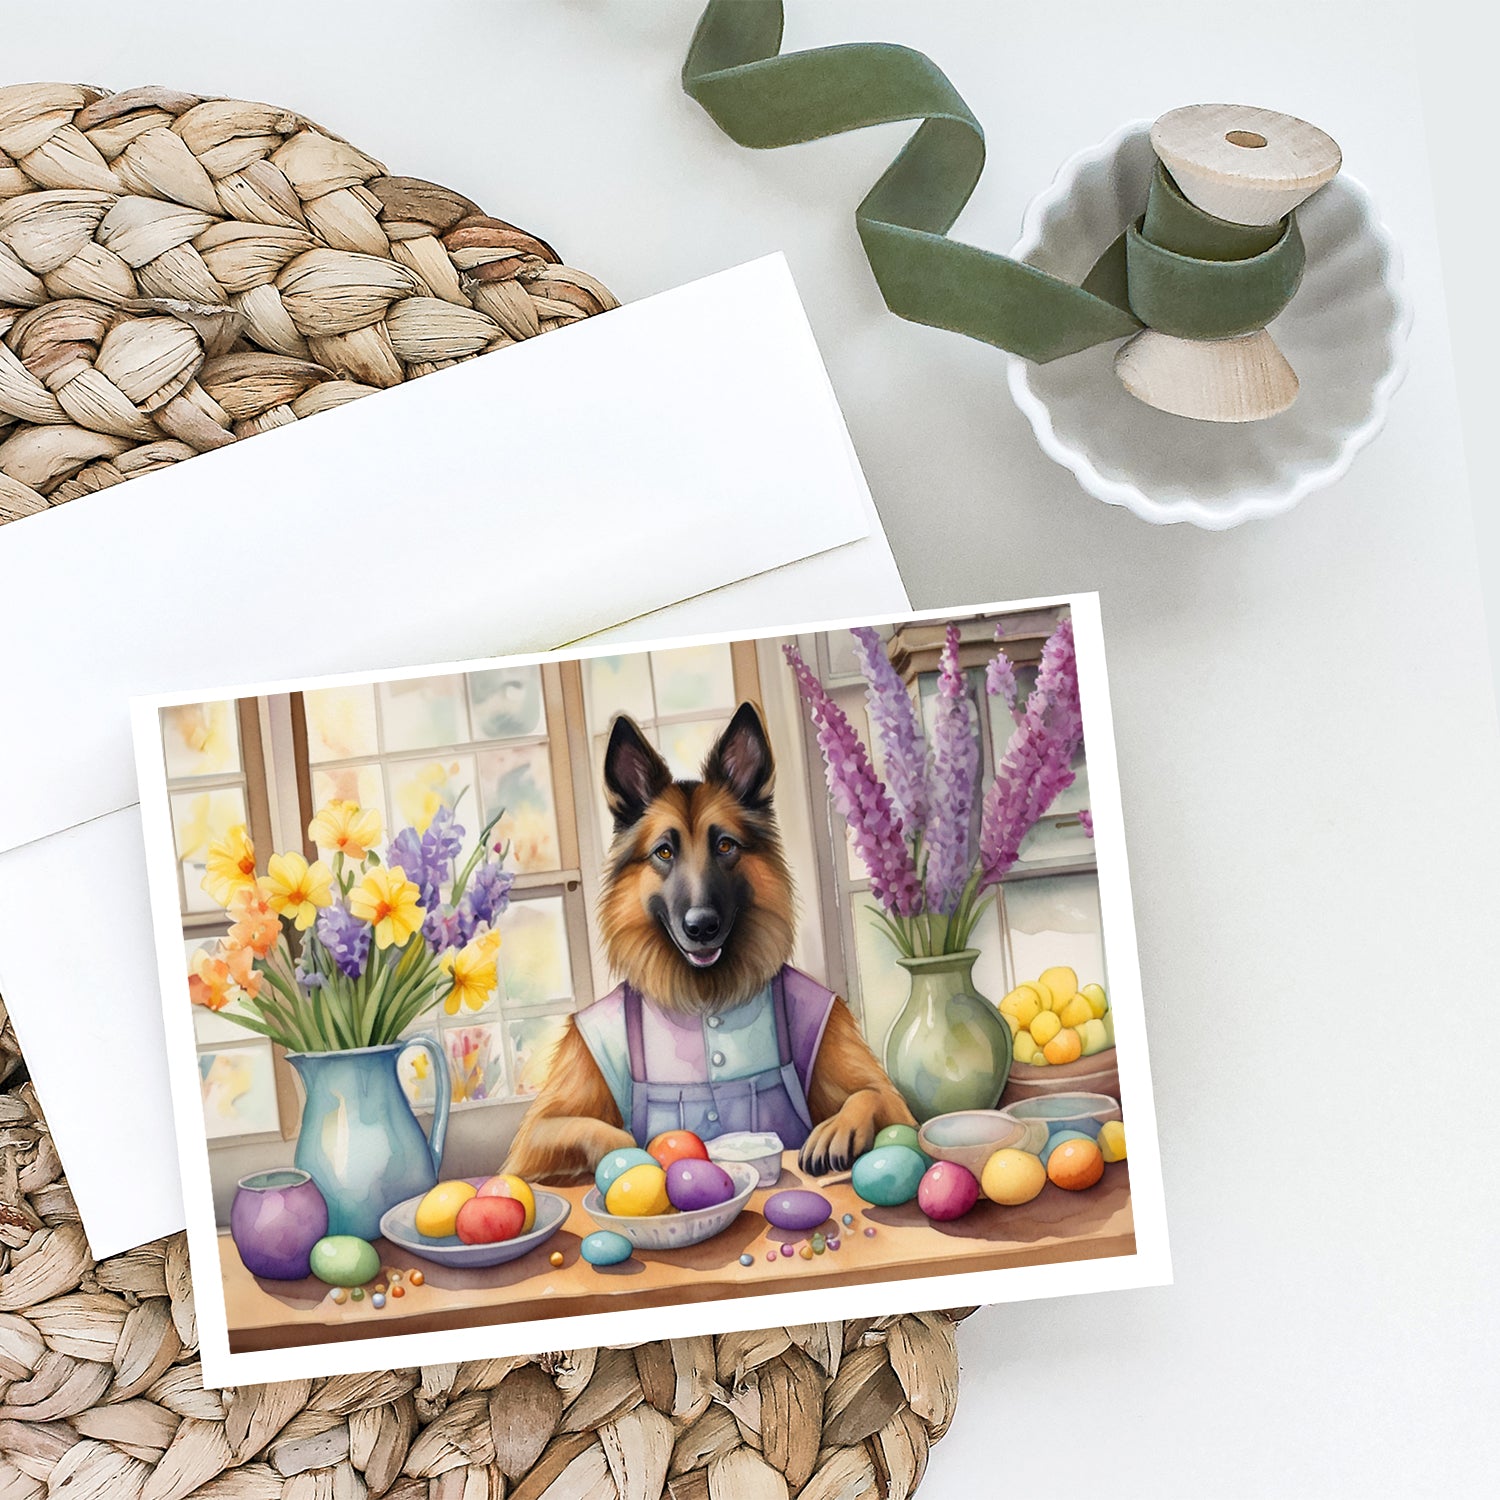 Buy this Decorating Easter Belgian Tervuren Greeting Cards Pack of 8